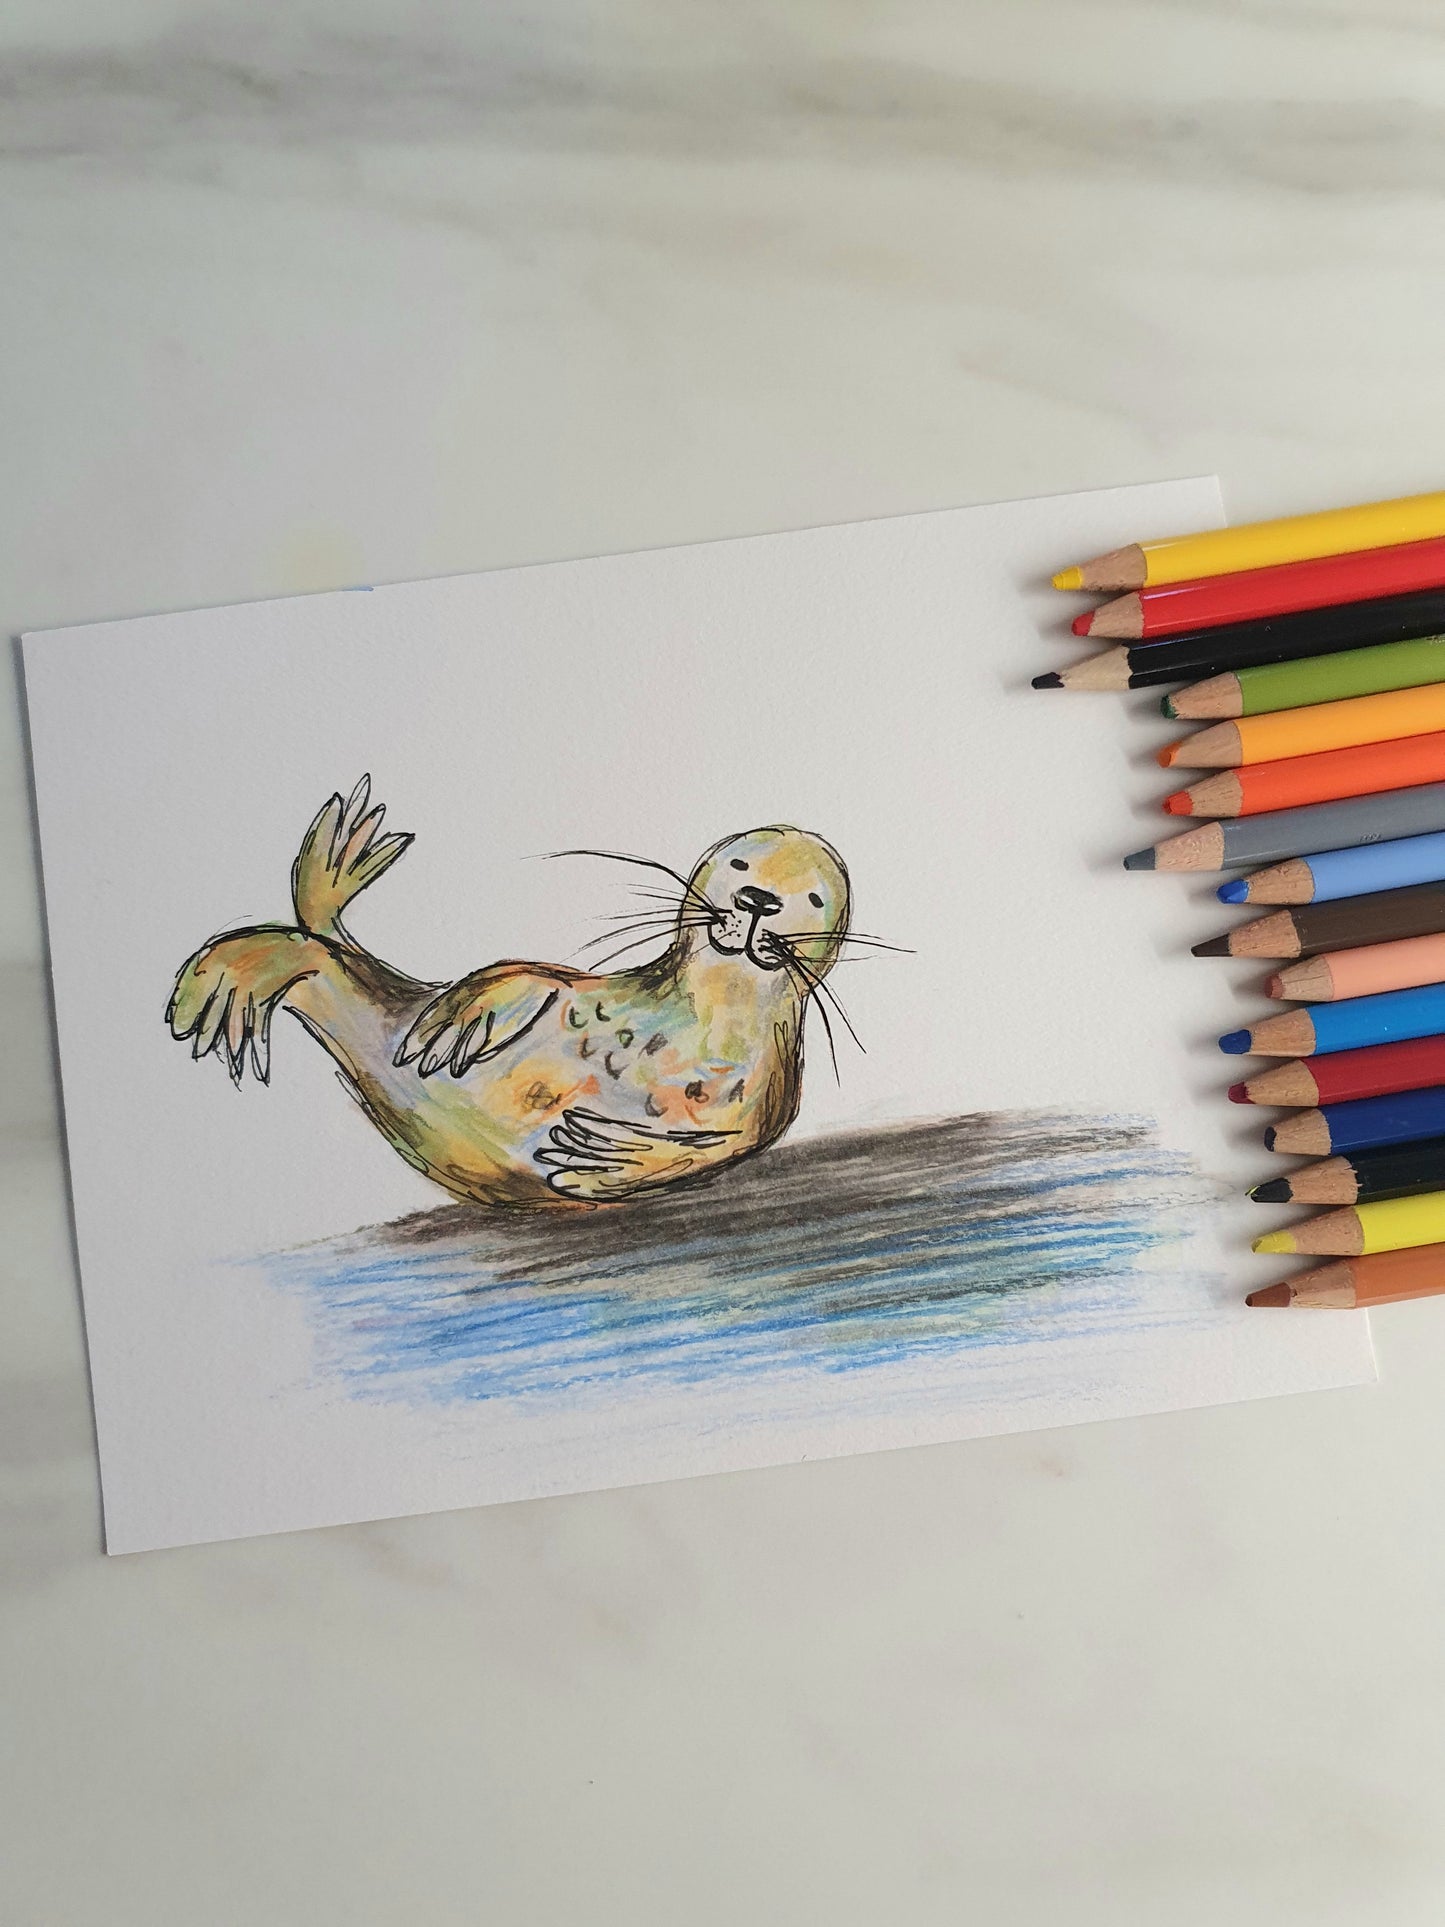 Seal illustration 'Jim'